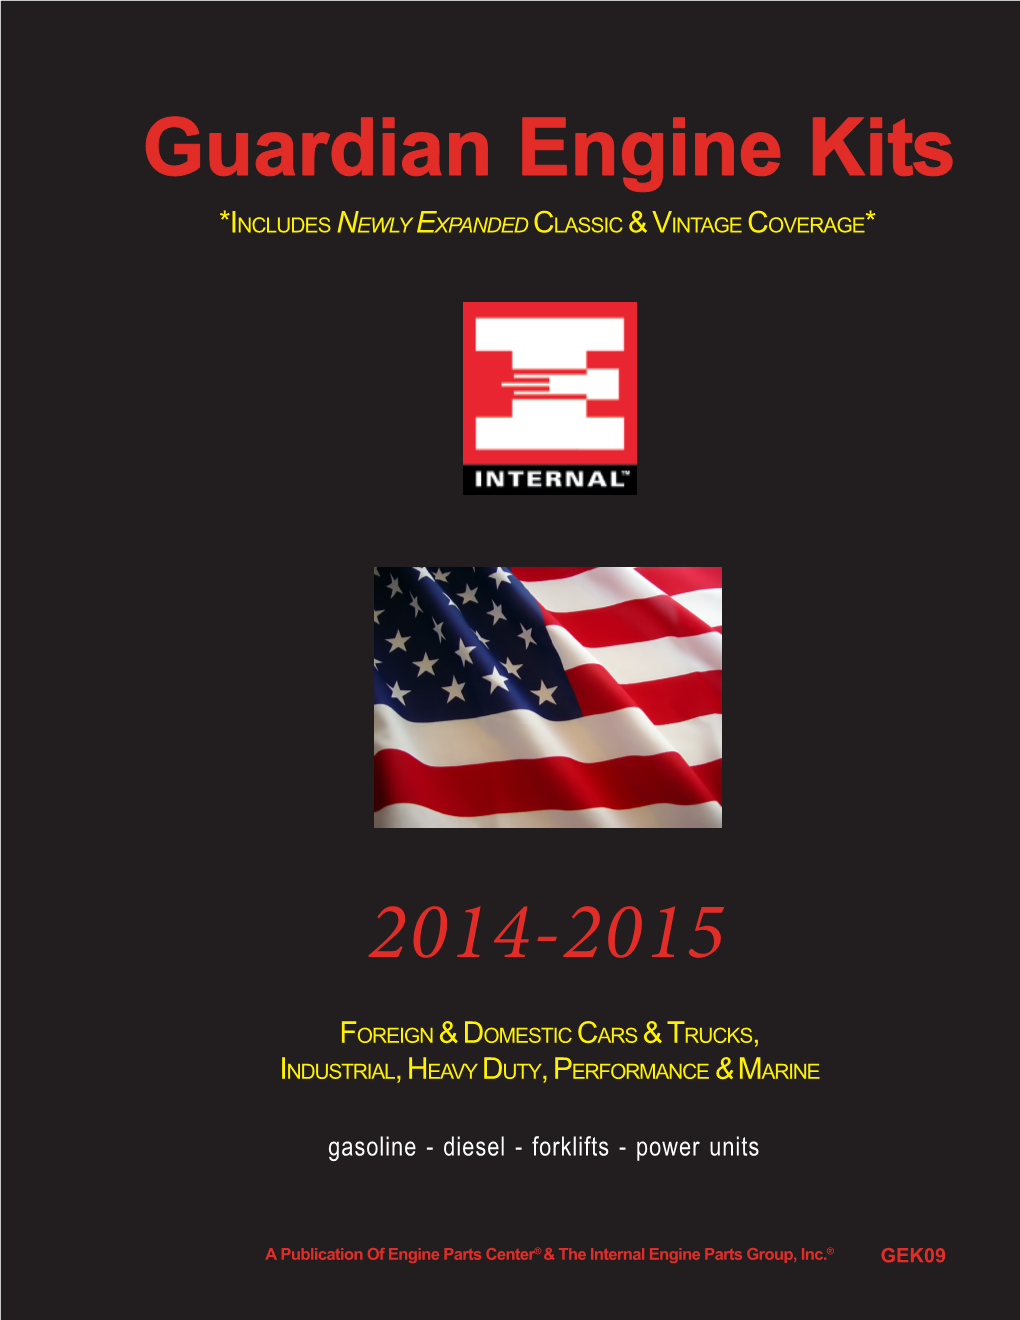 Guardian Engine Kit Guardian Engine Kitss 2014-2015